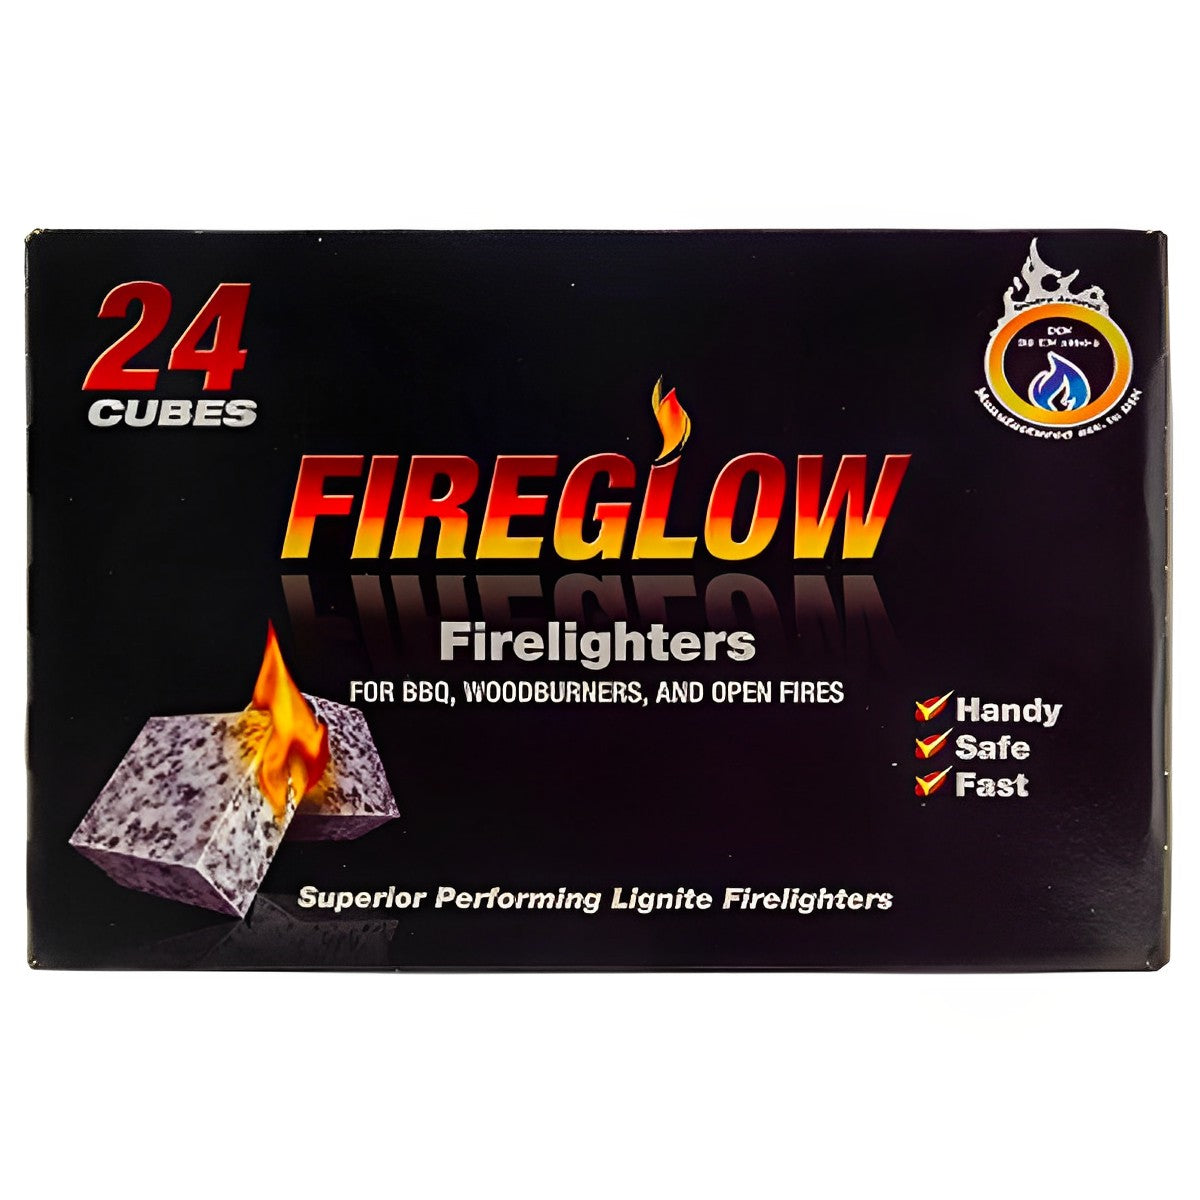 Fireglow - Firelighters 24 Cubes - 250g - Continental Food Store